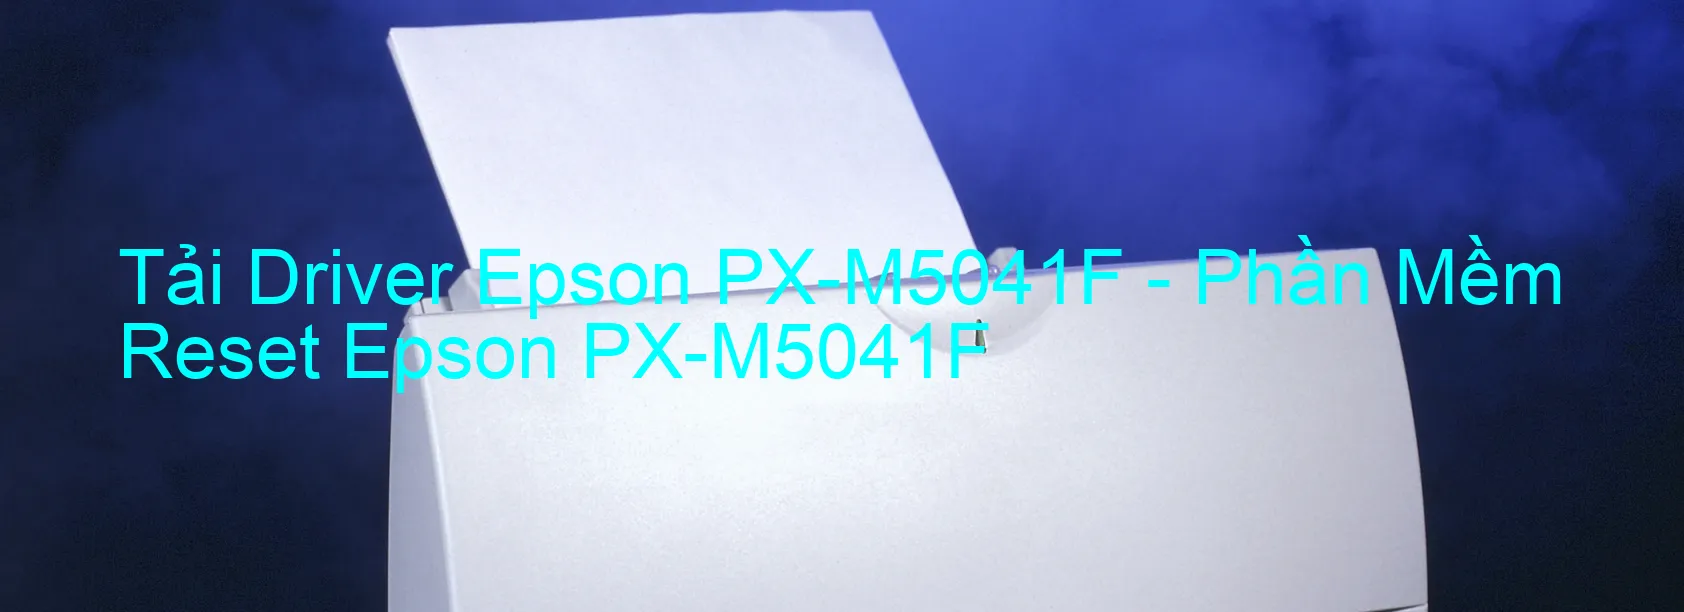 Driver Epson PX-M5041F, Phần Mềm Reset Epson PX-M5041F